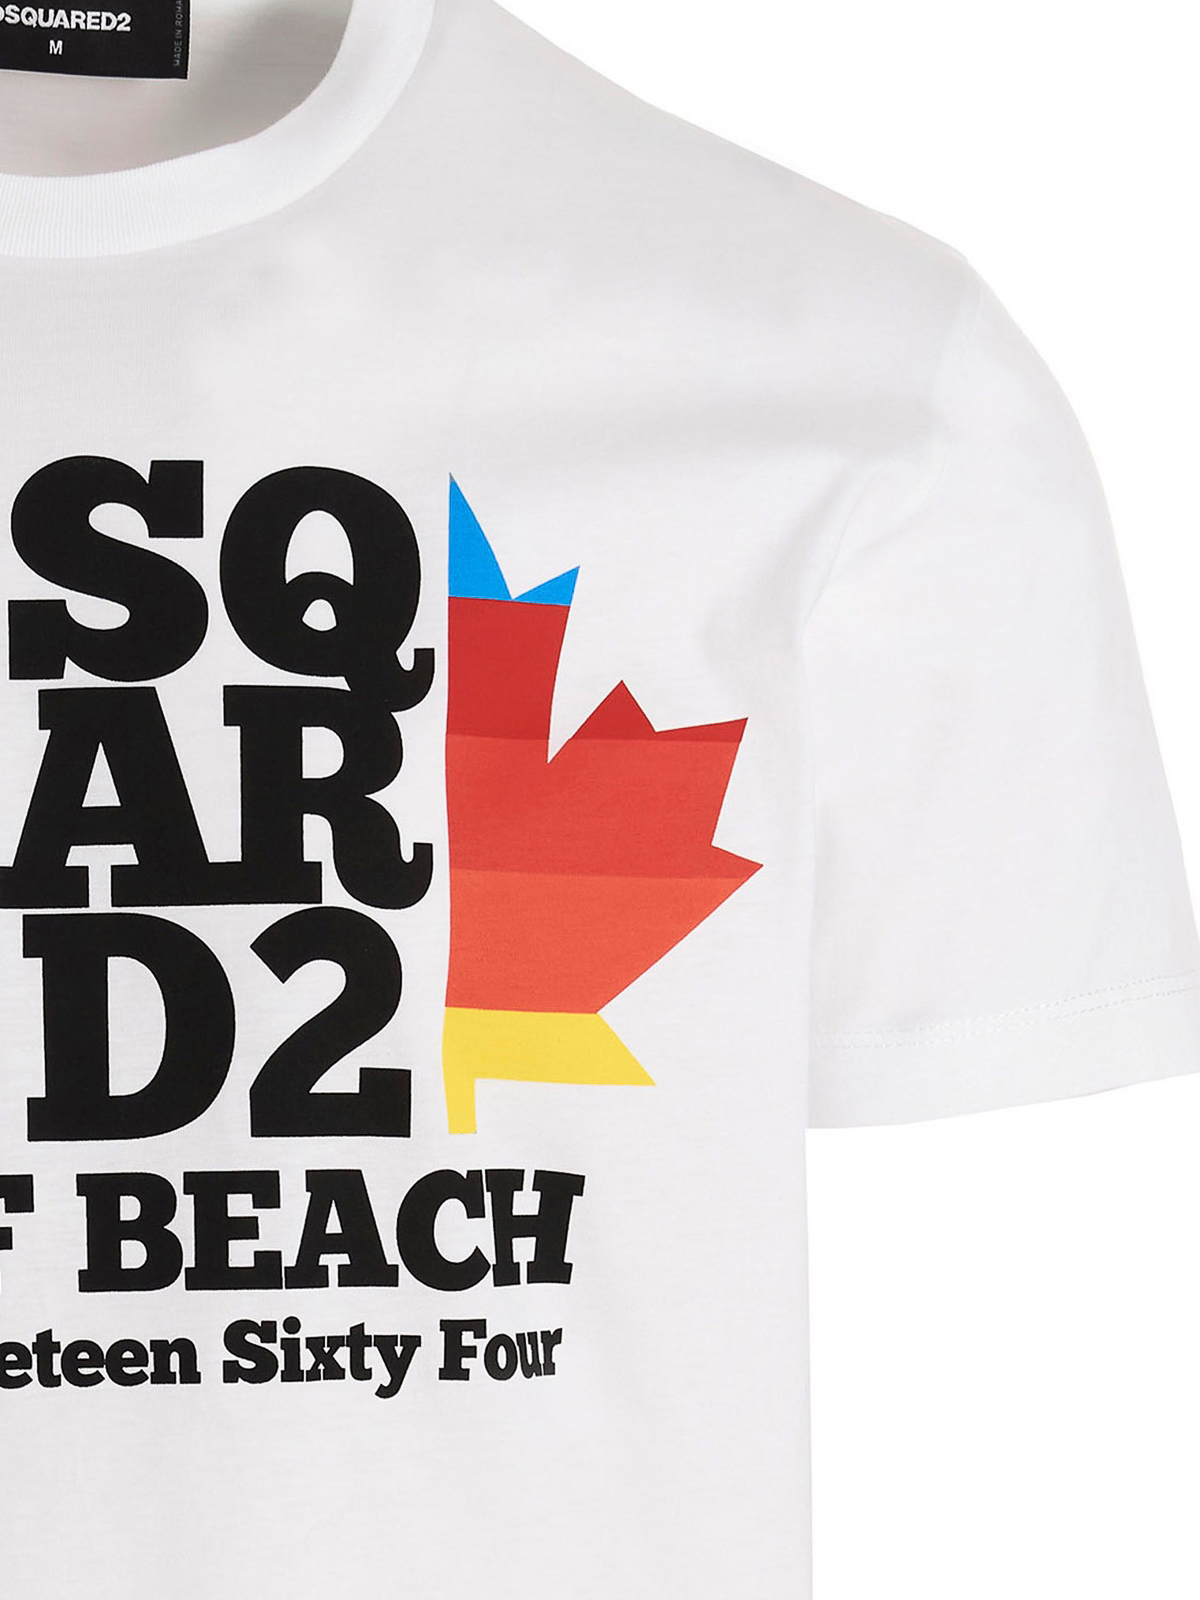 Shop Dsquared2 T-shirt D2 Surf Beach In White